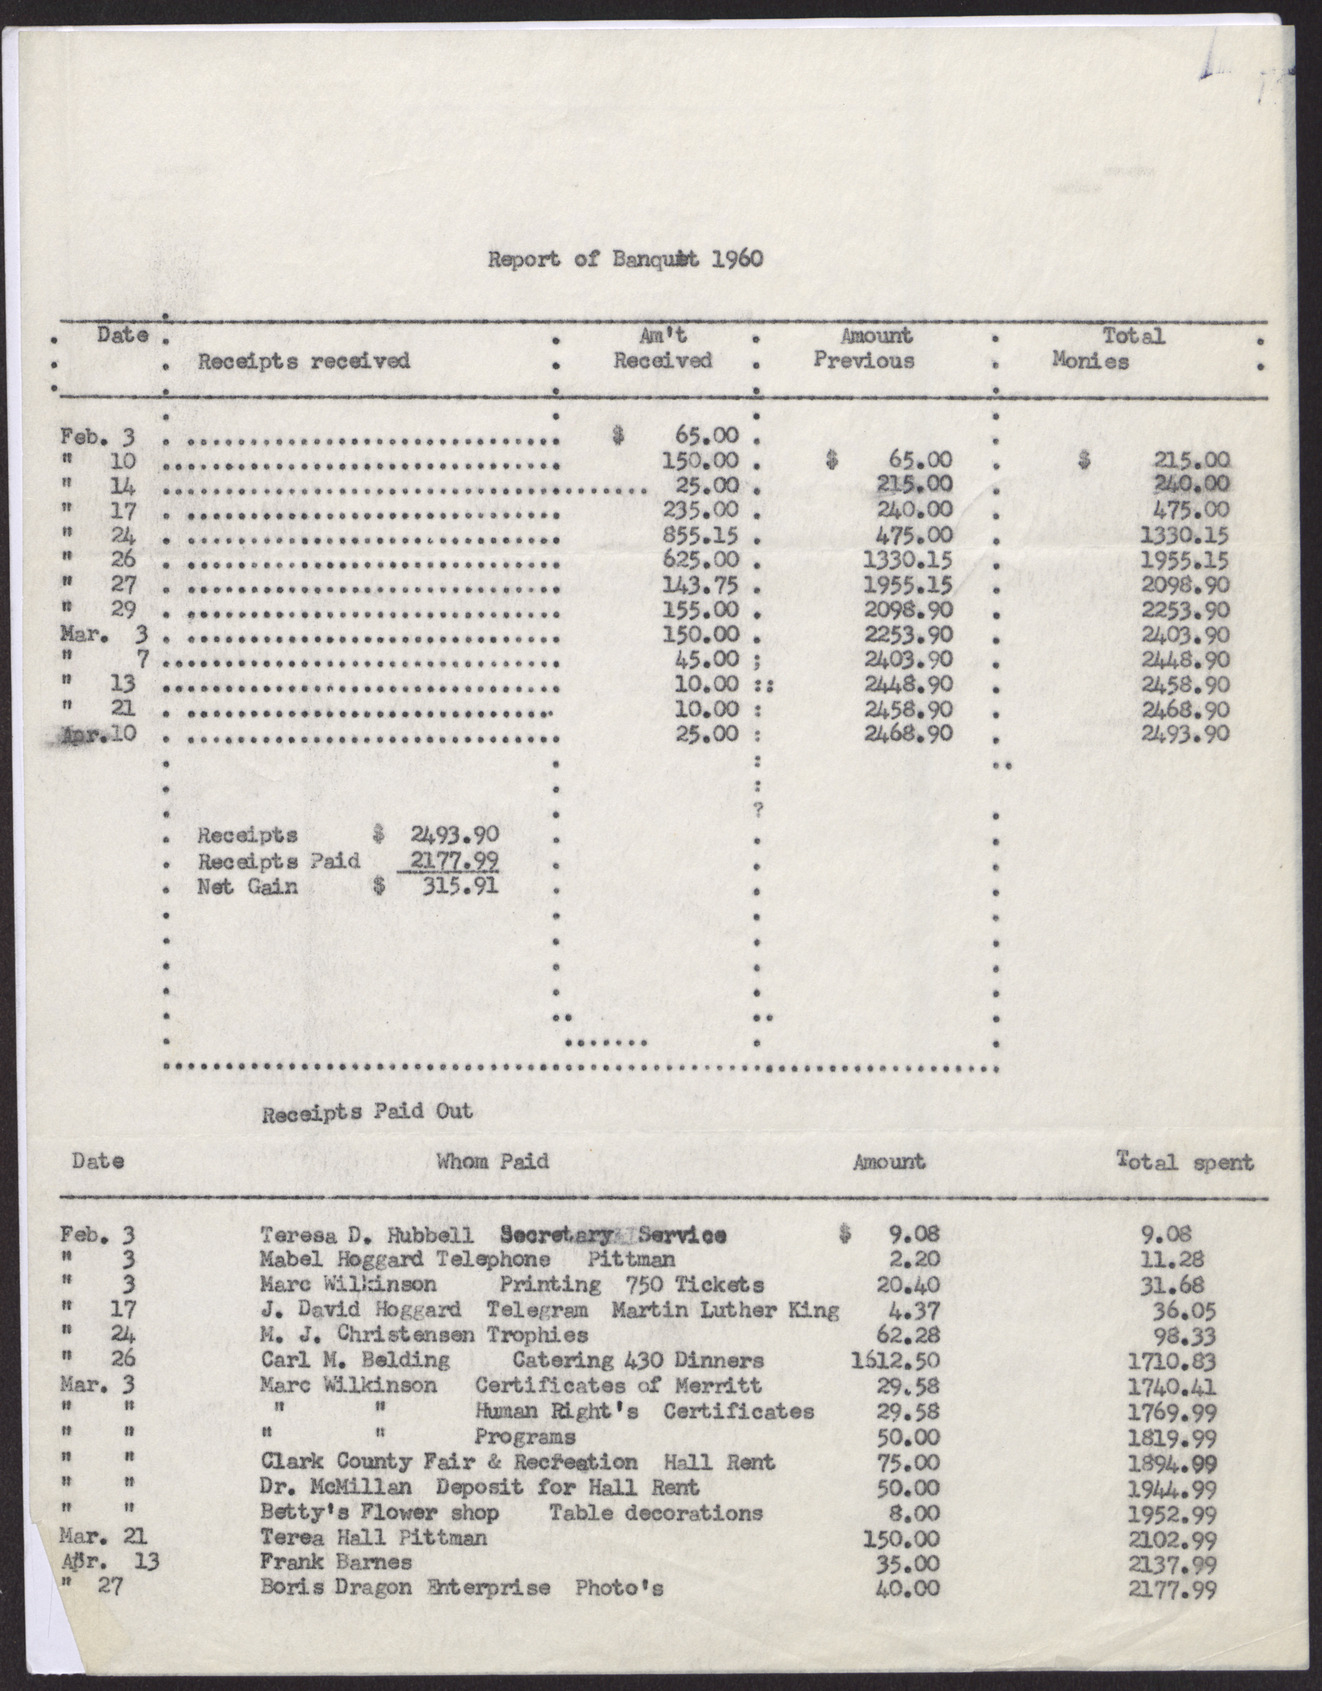 Expenditure Report of Banquet, 1960